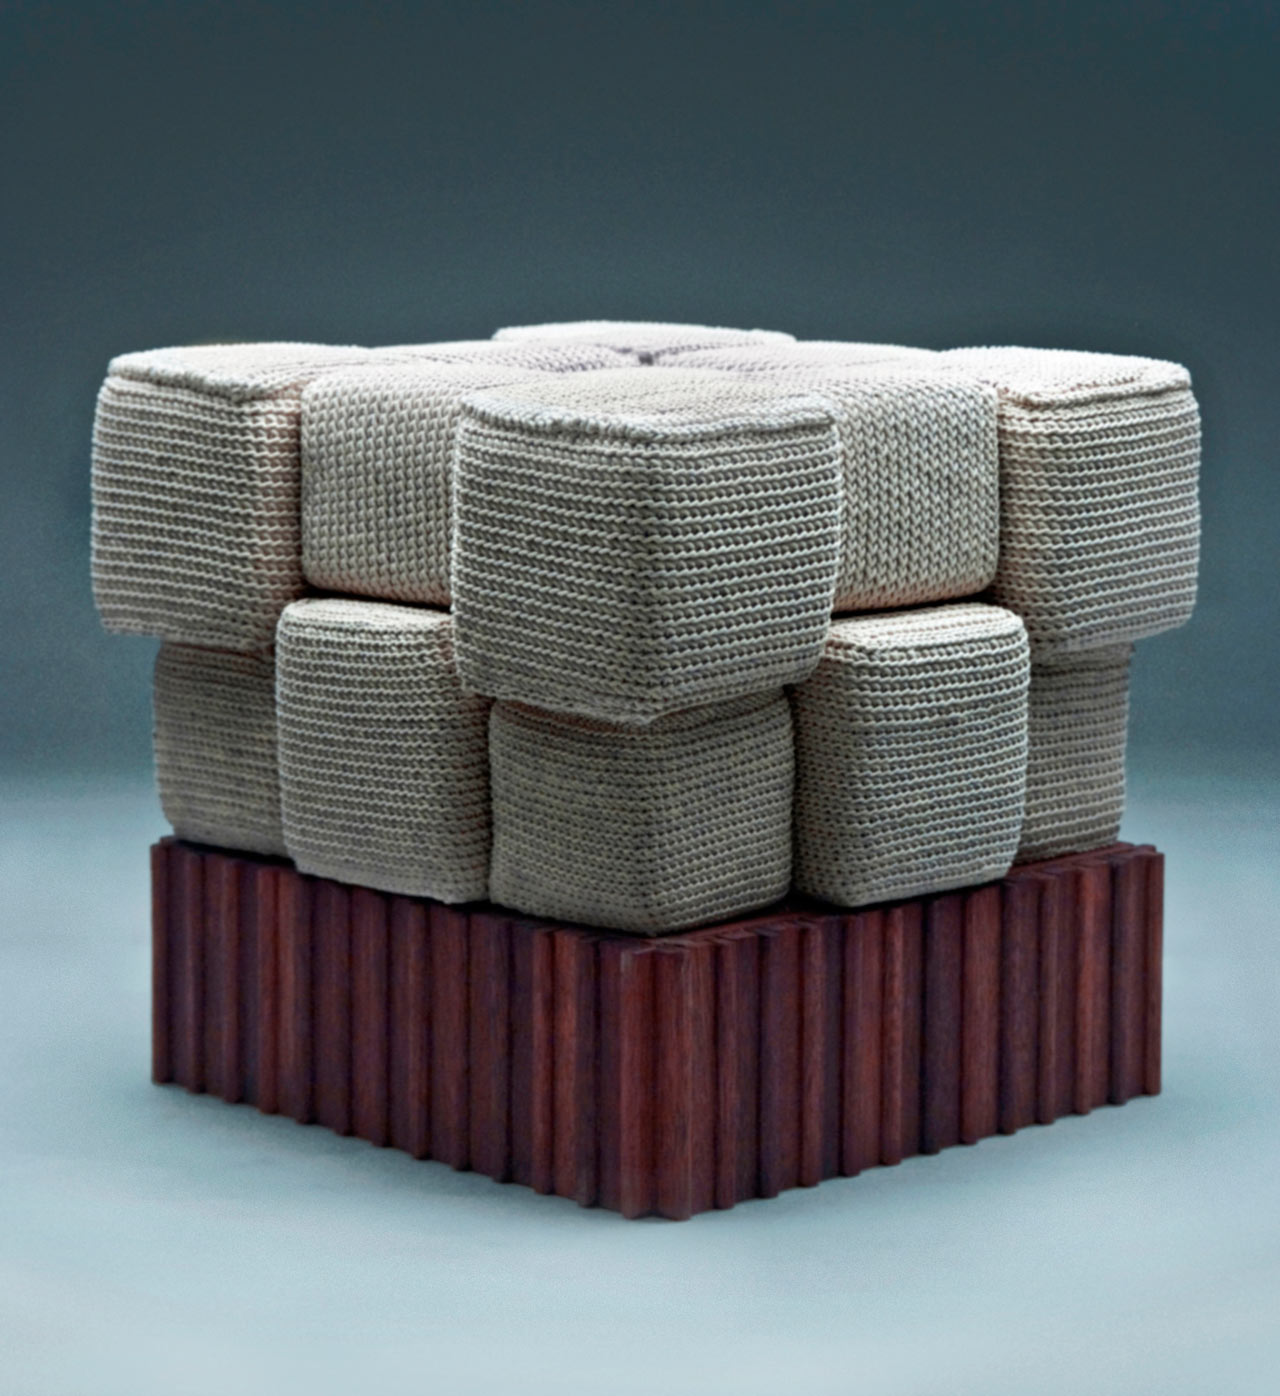 Creative Furniture Made of Yarn and Thread